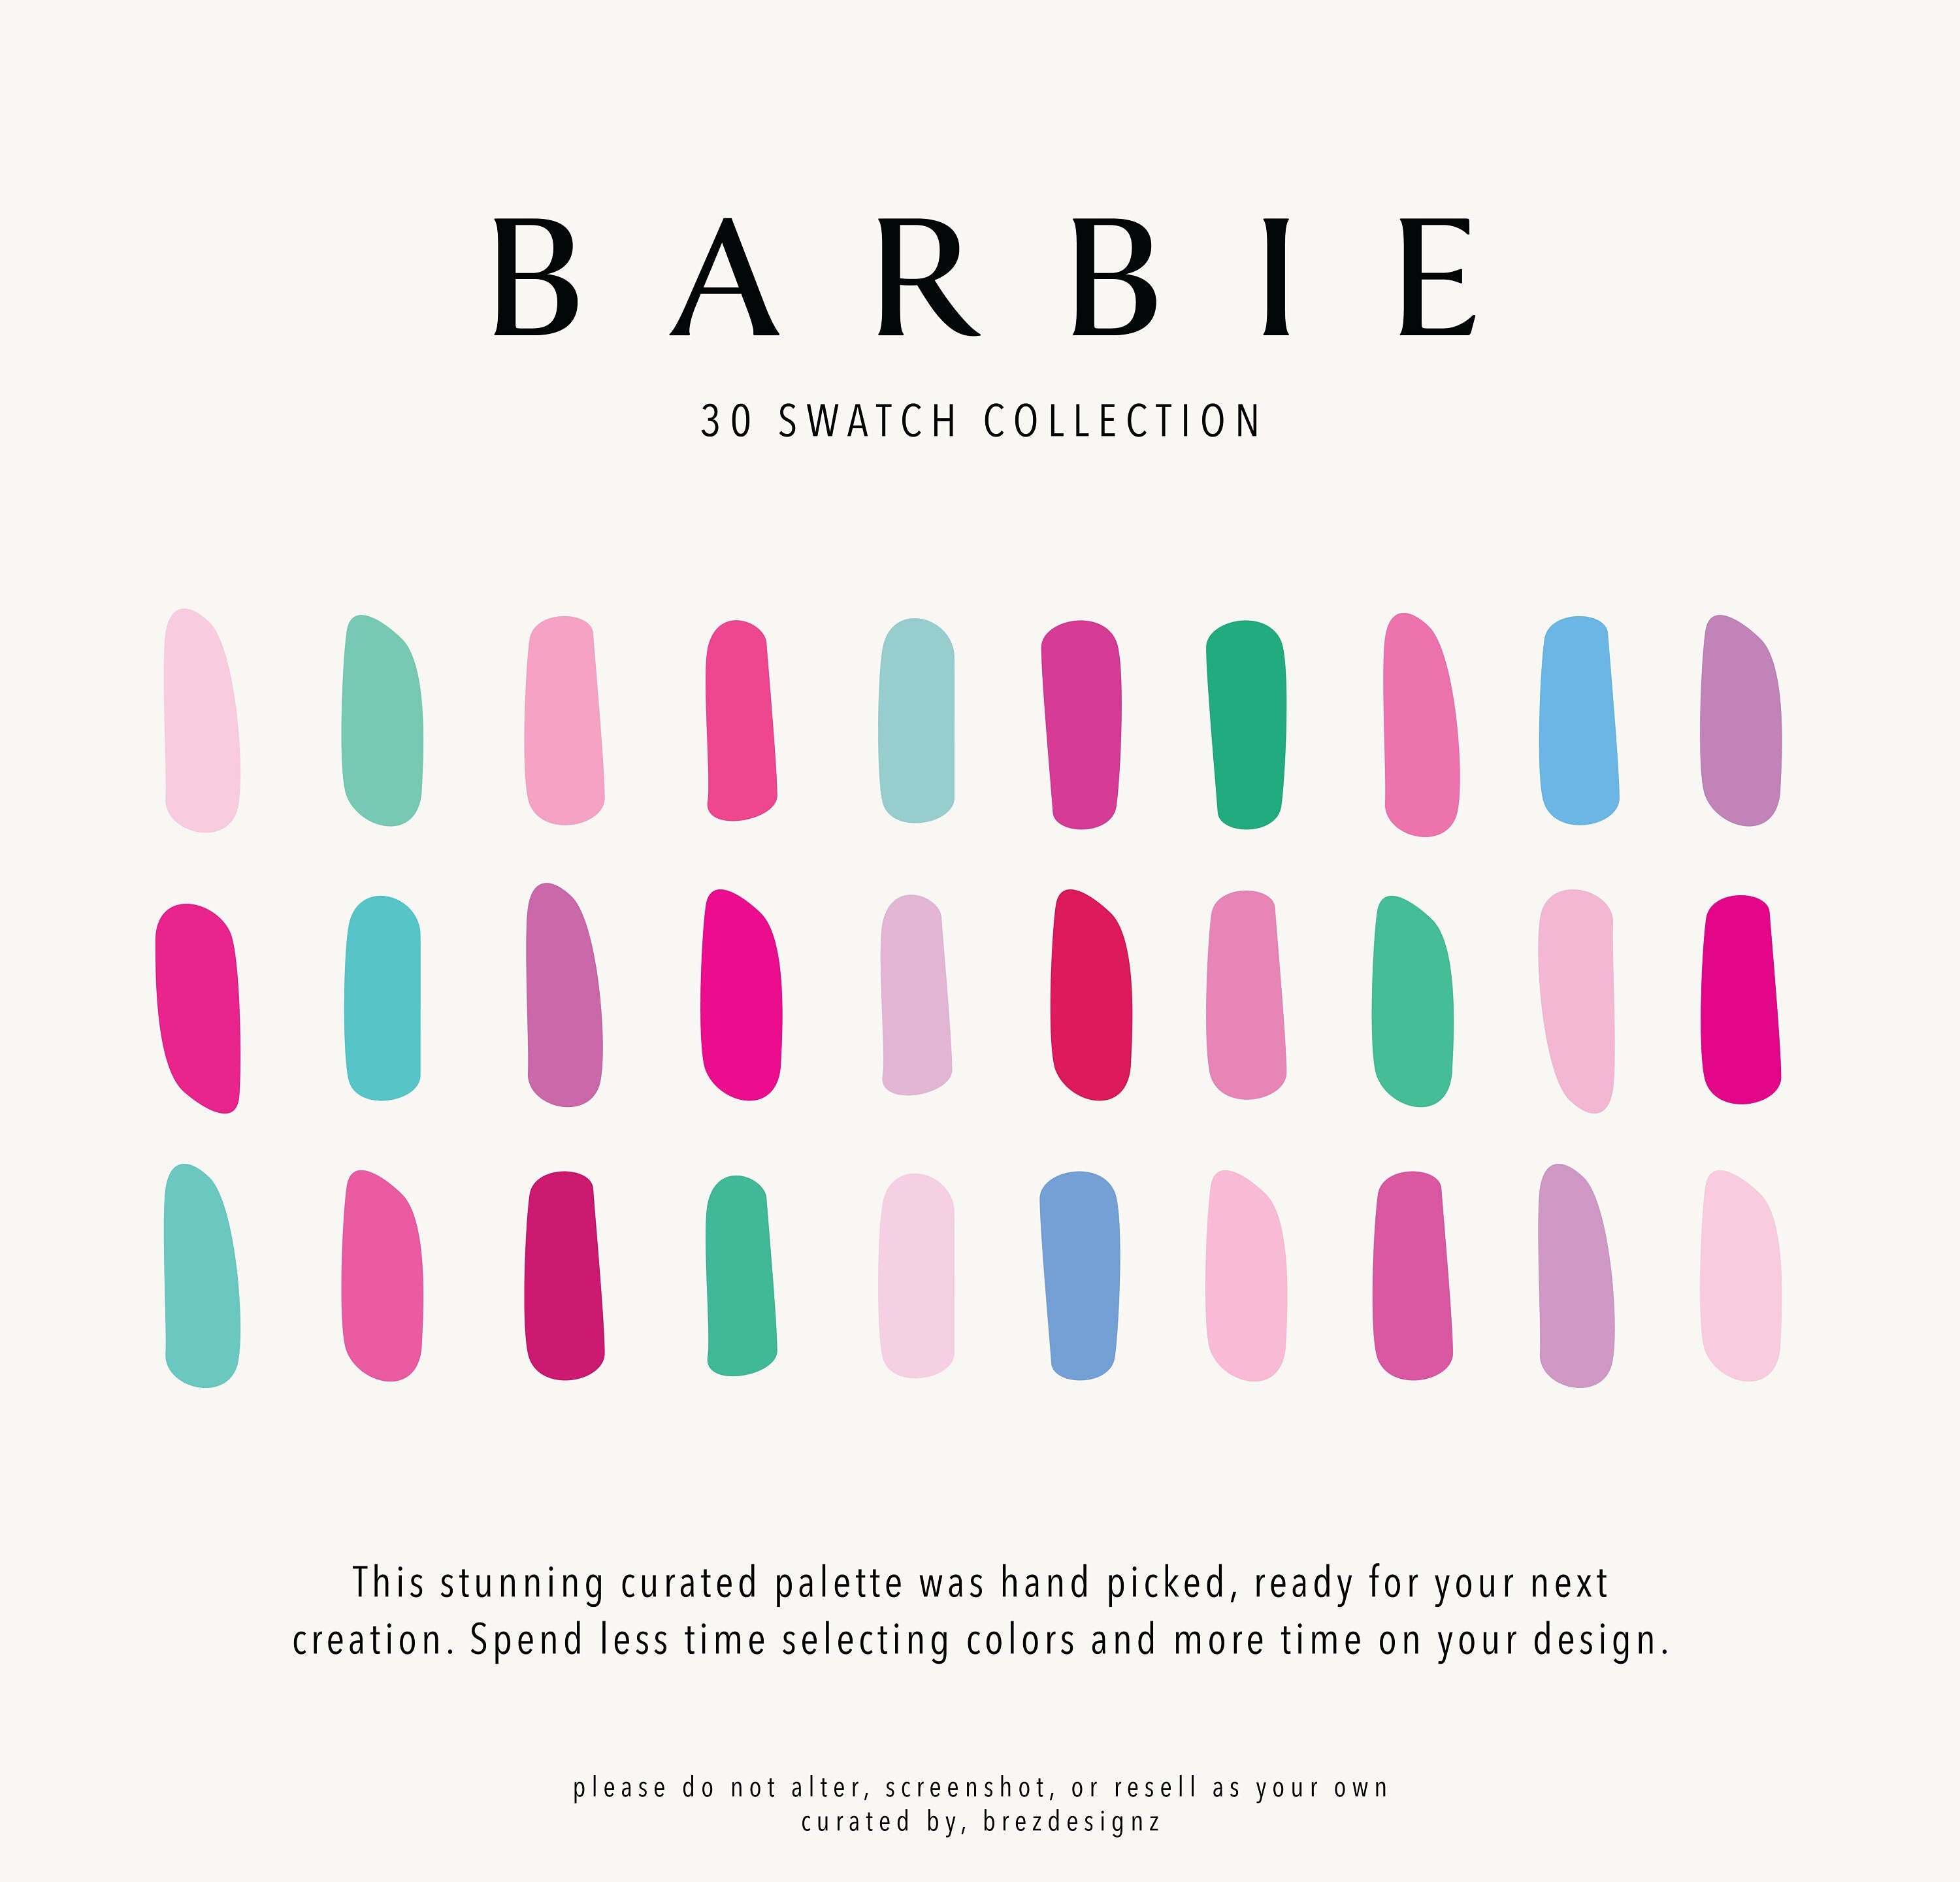 Barbie Dream House 30 Swatch Digital Color Palette